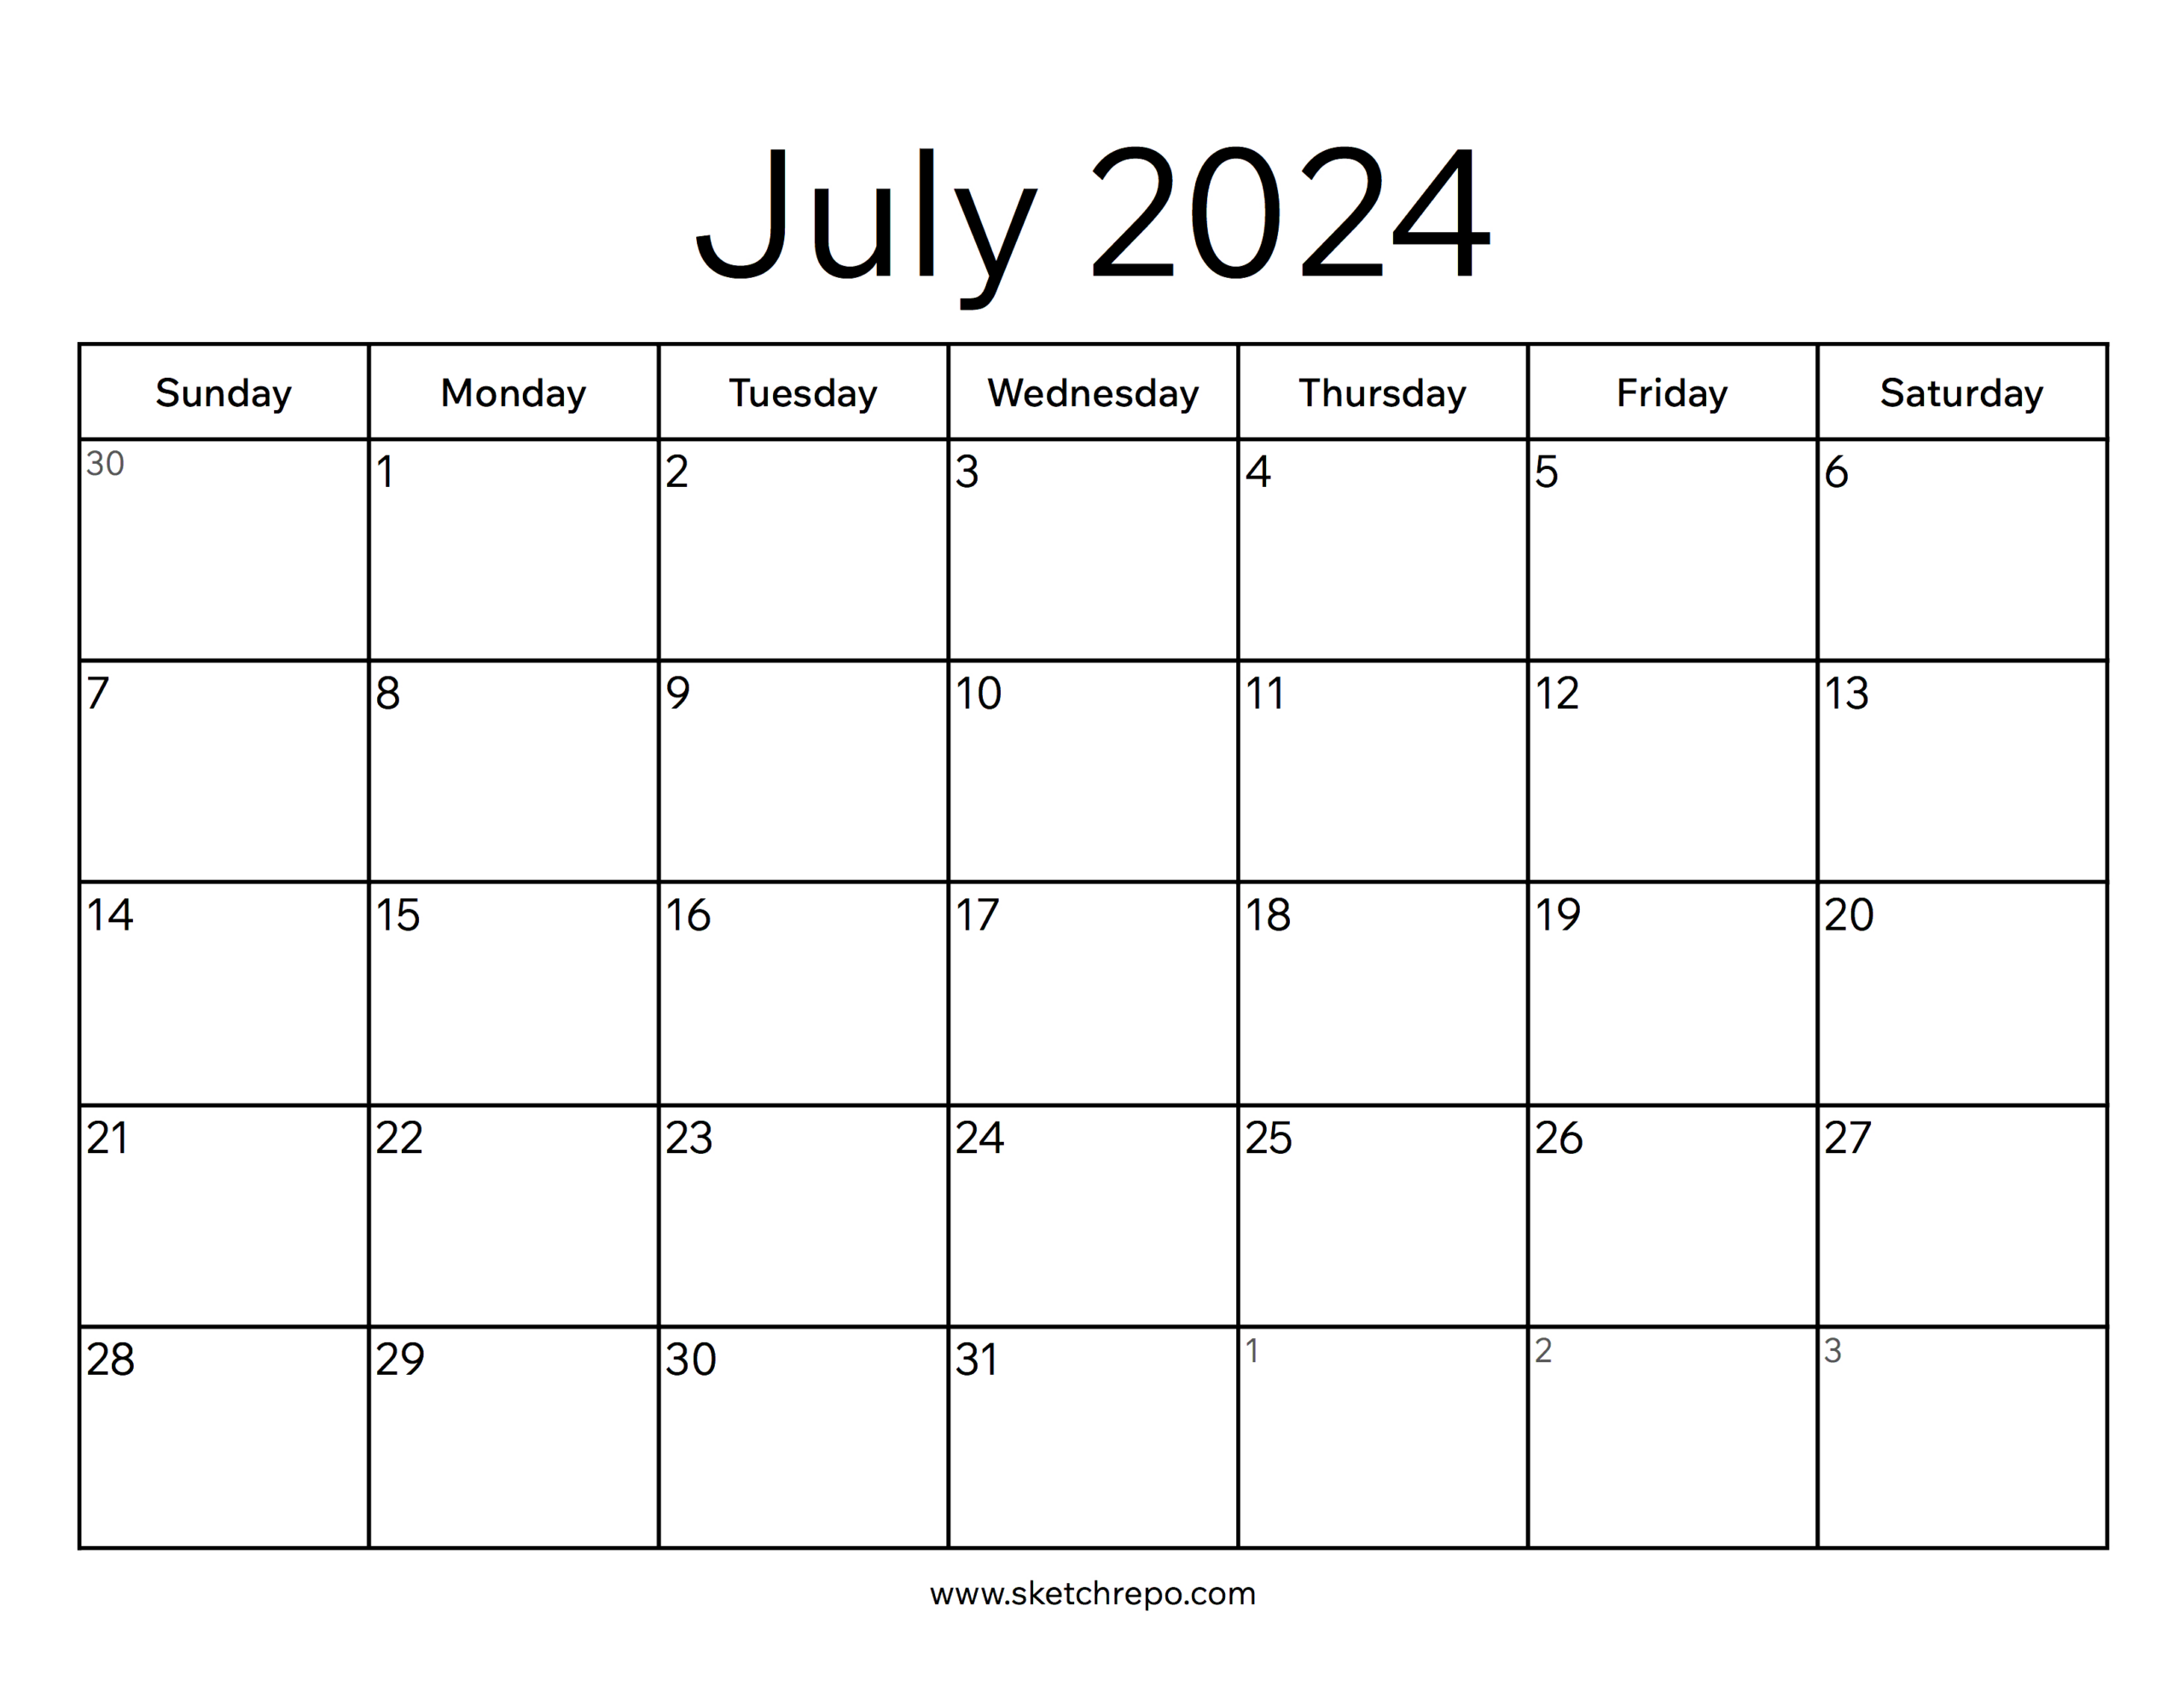 July 2024 Calendar – Sketch Repo | The Calendar For July 2024